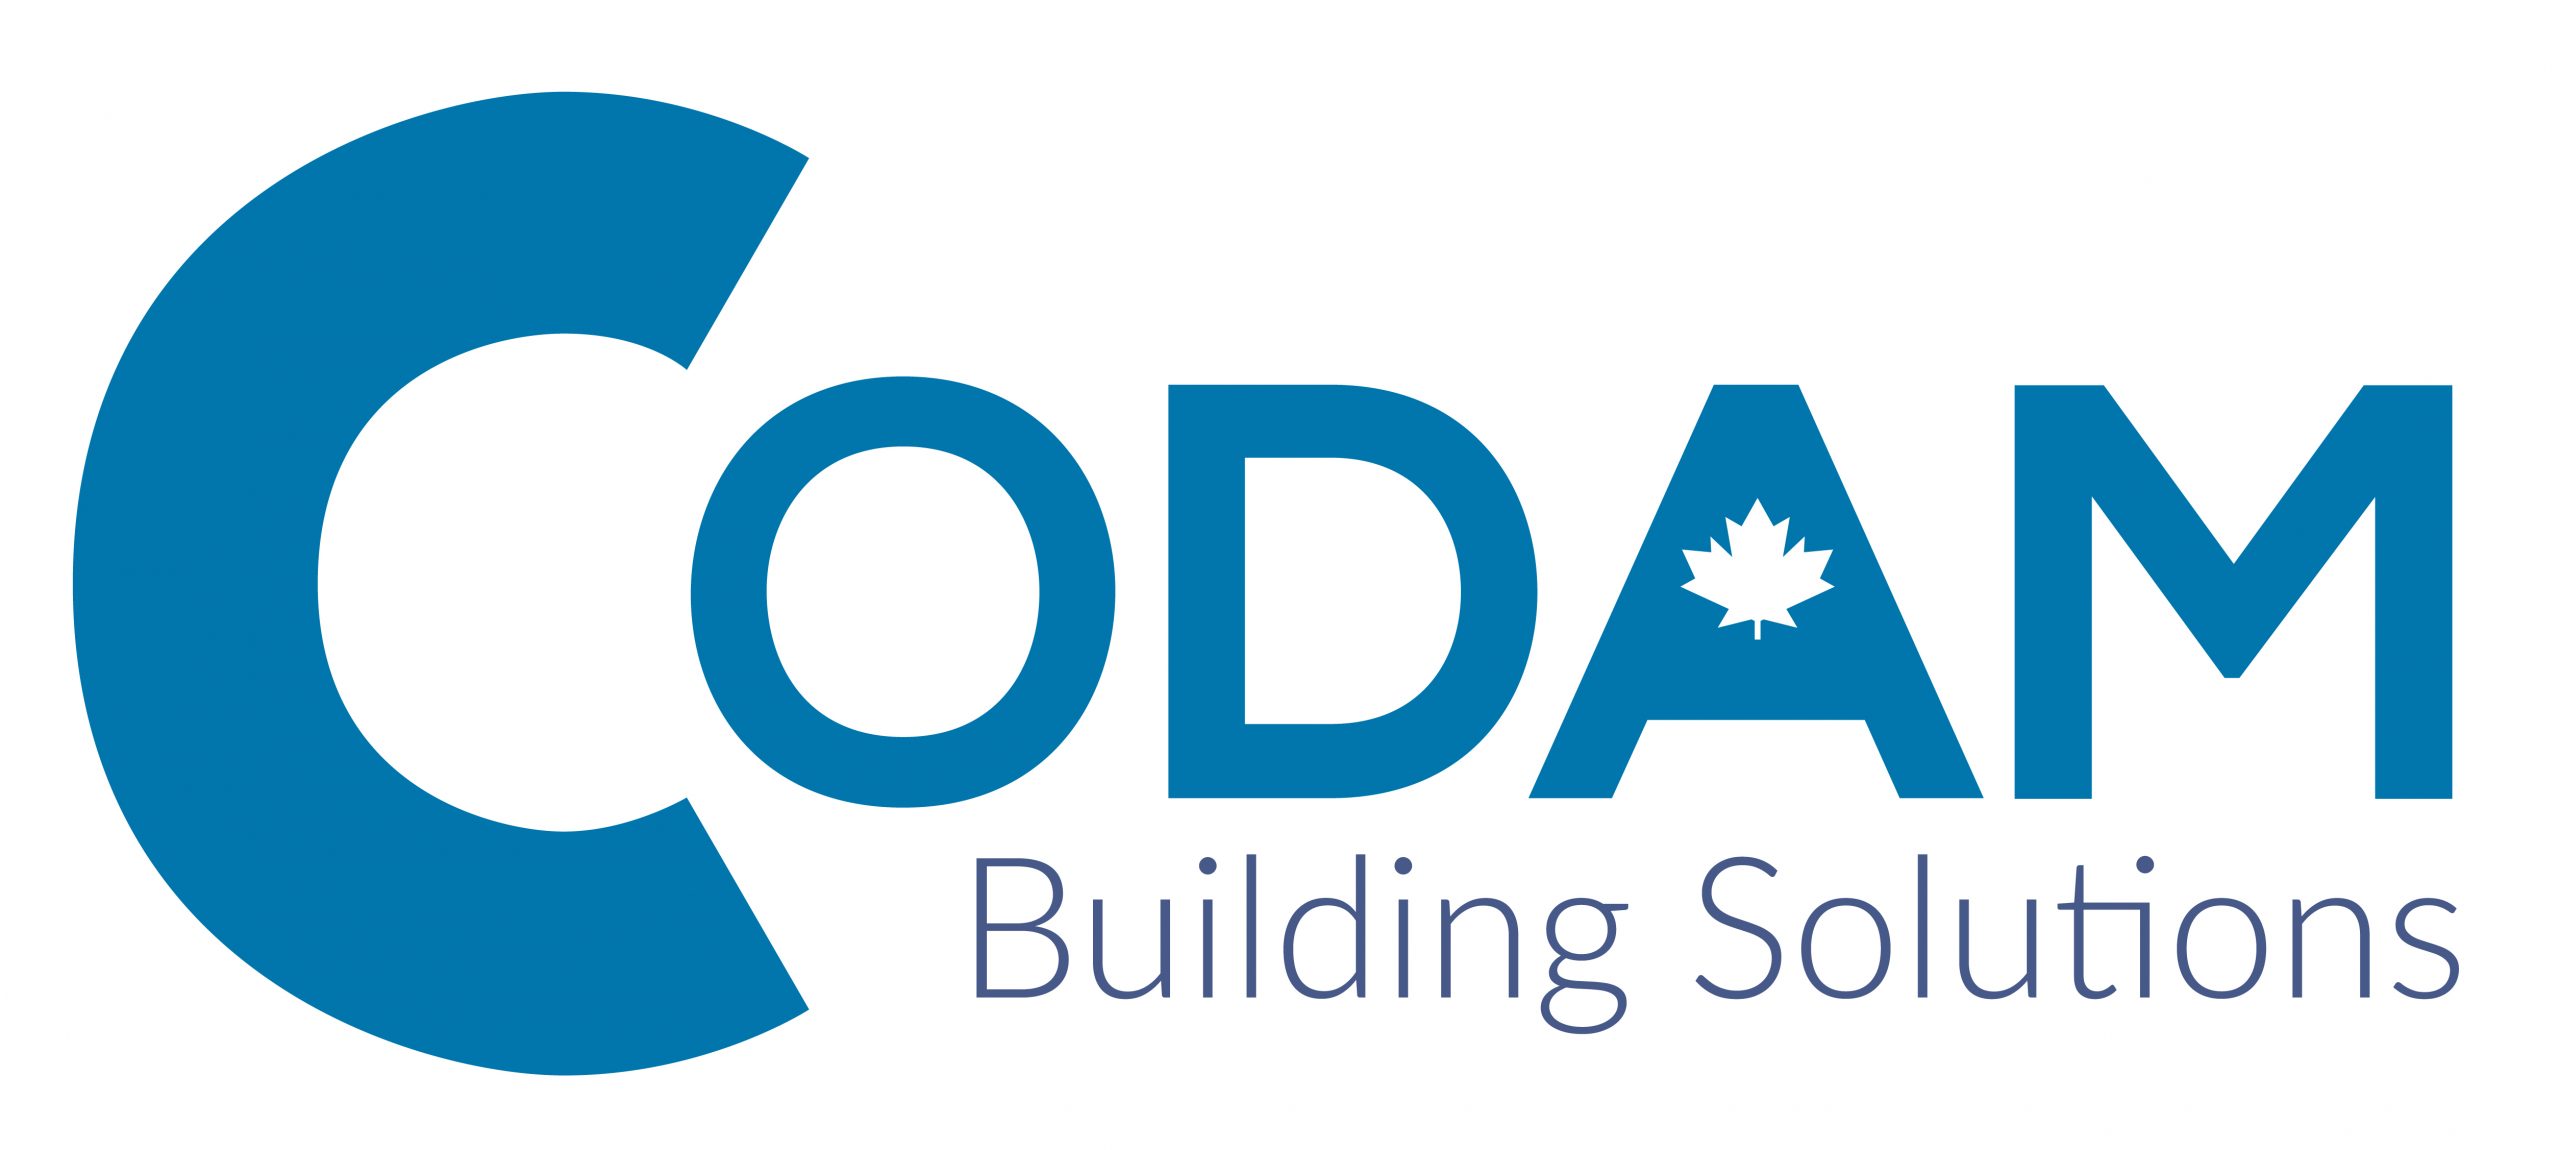 Codam Building Solutions